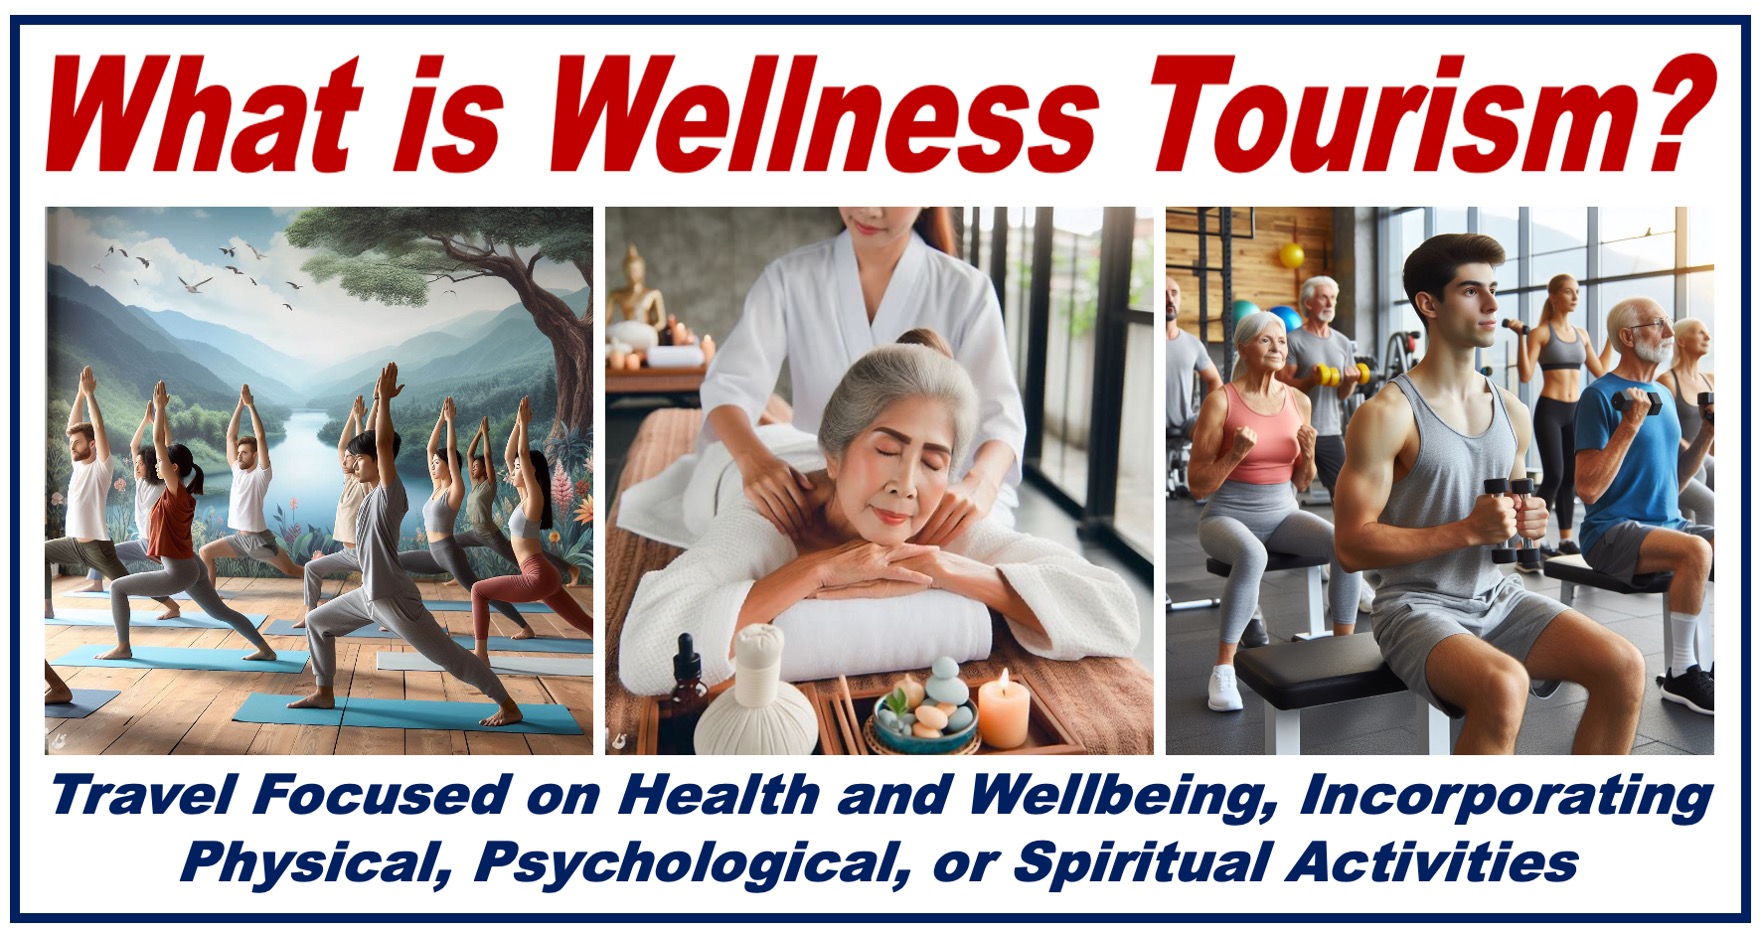 3 Images depicting wellness tourism plus its definition